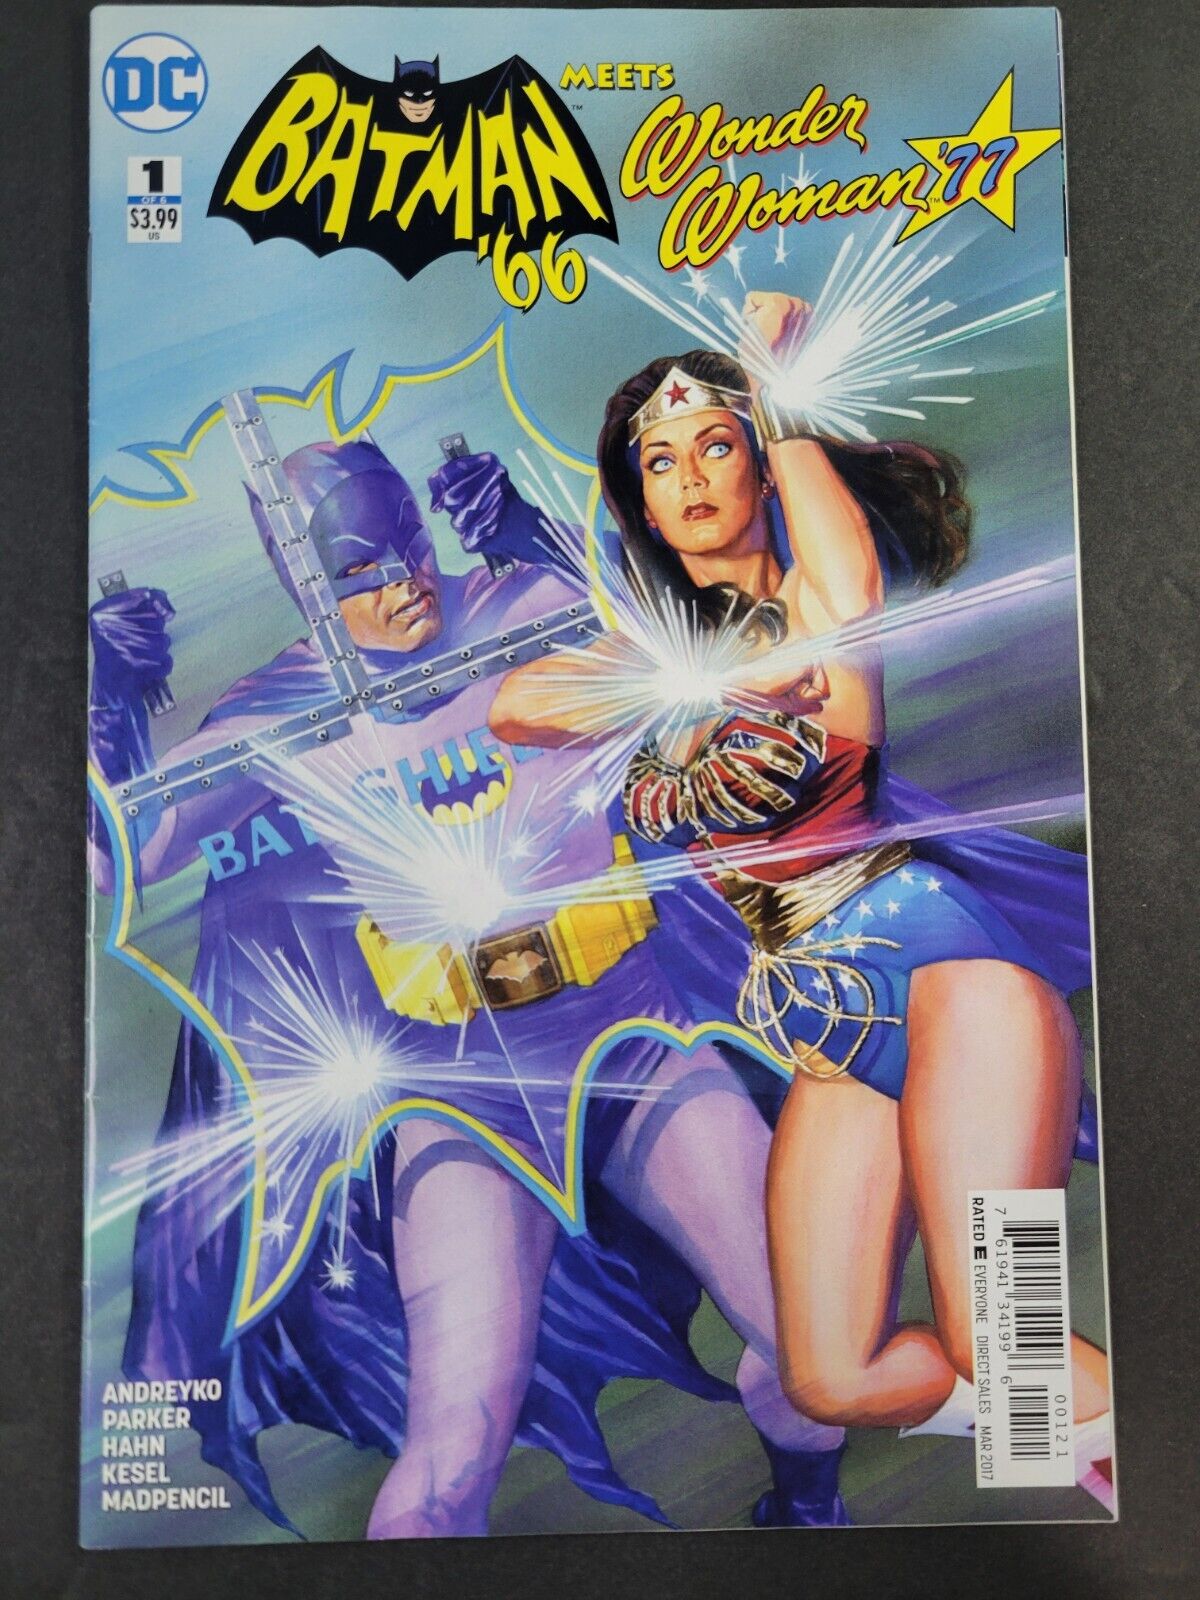 Batman 66 Meets Wonder Woman 77 #1  (2017) - Alex Ross Variant - Lynda Carter